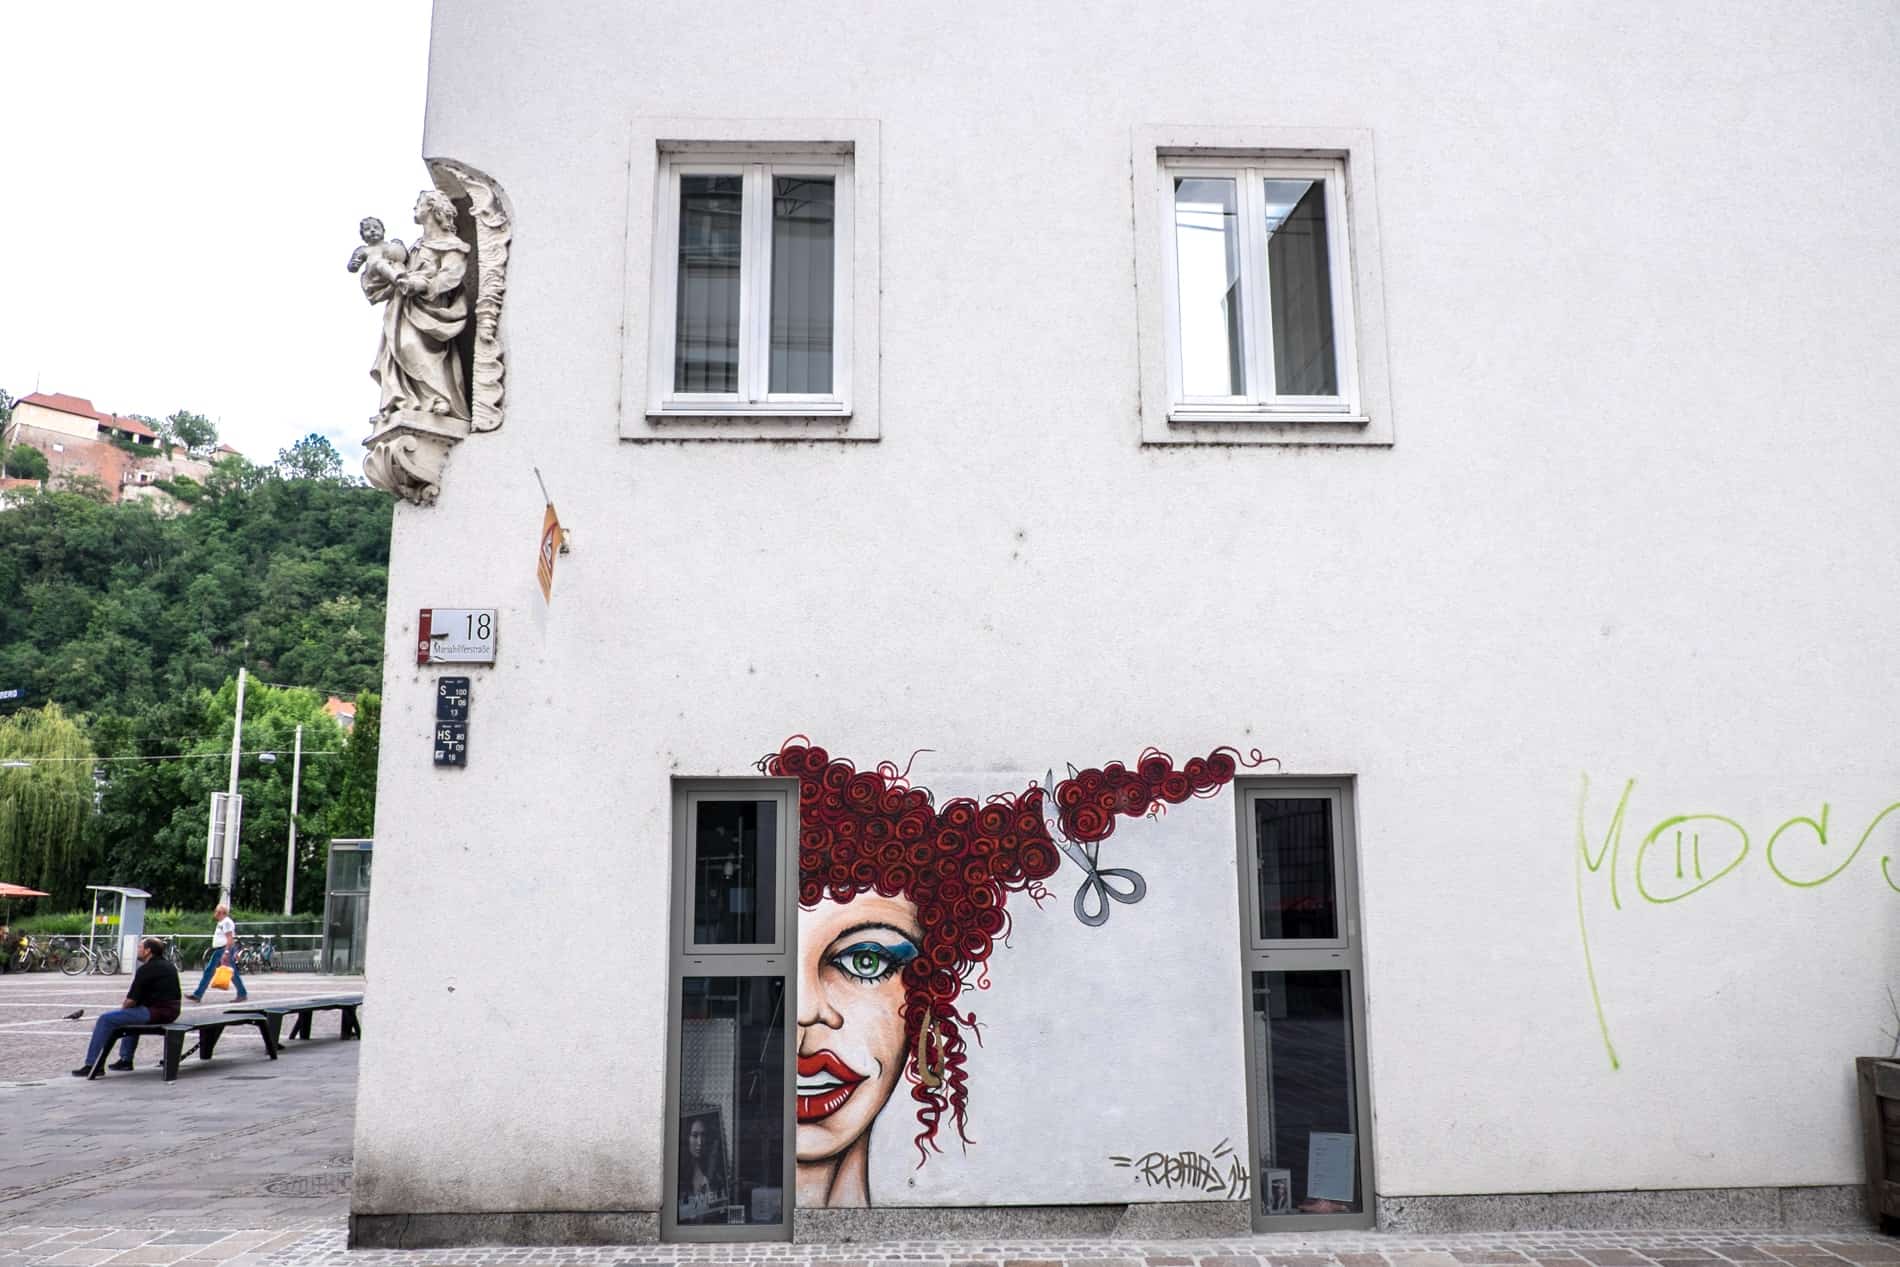 Street art of a woman having her hair cut to advertise a hairdresser in Lend, Graz.